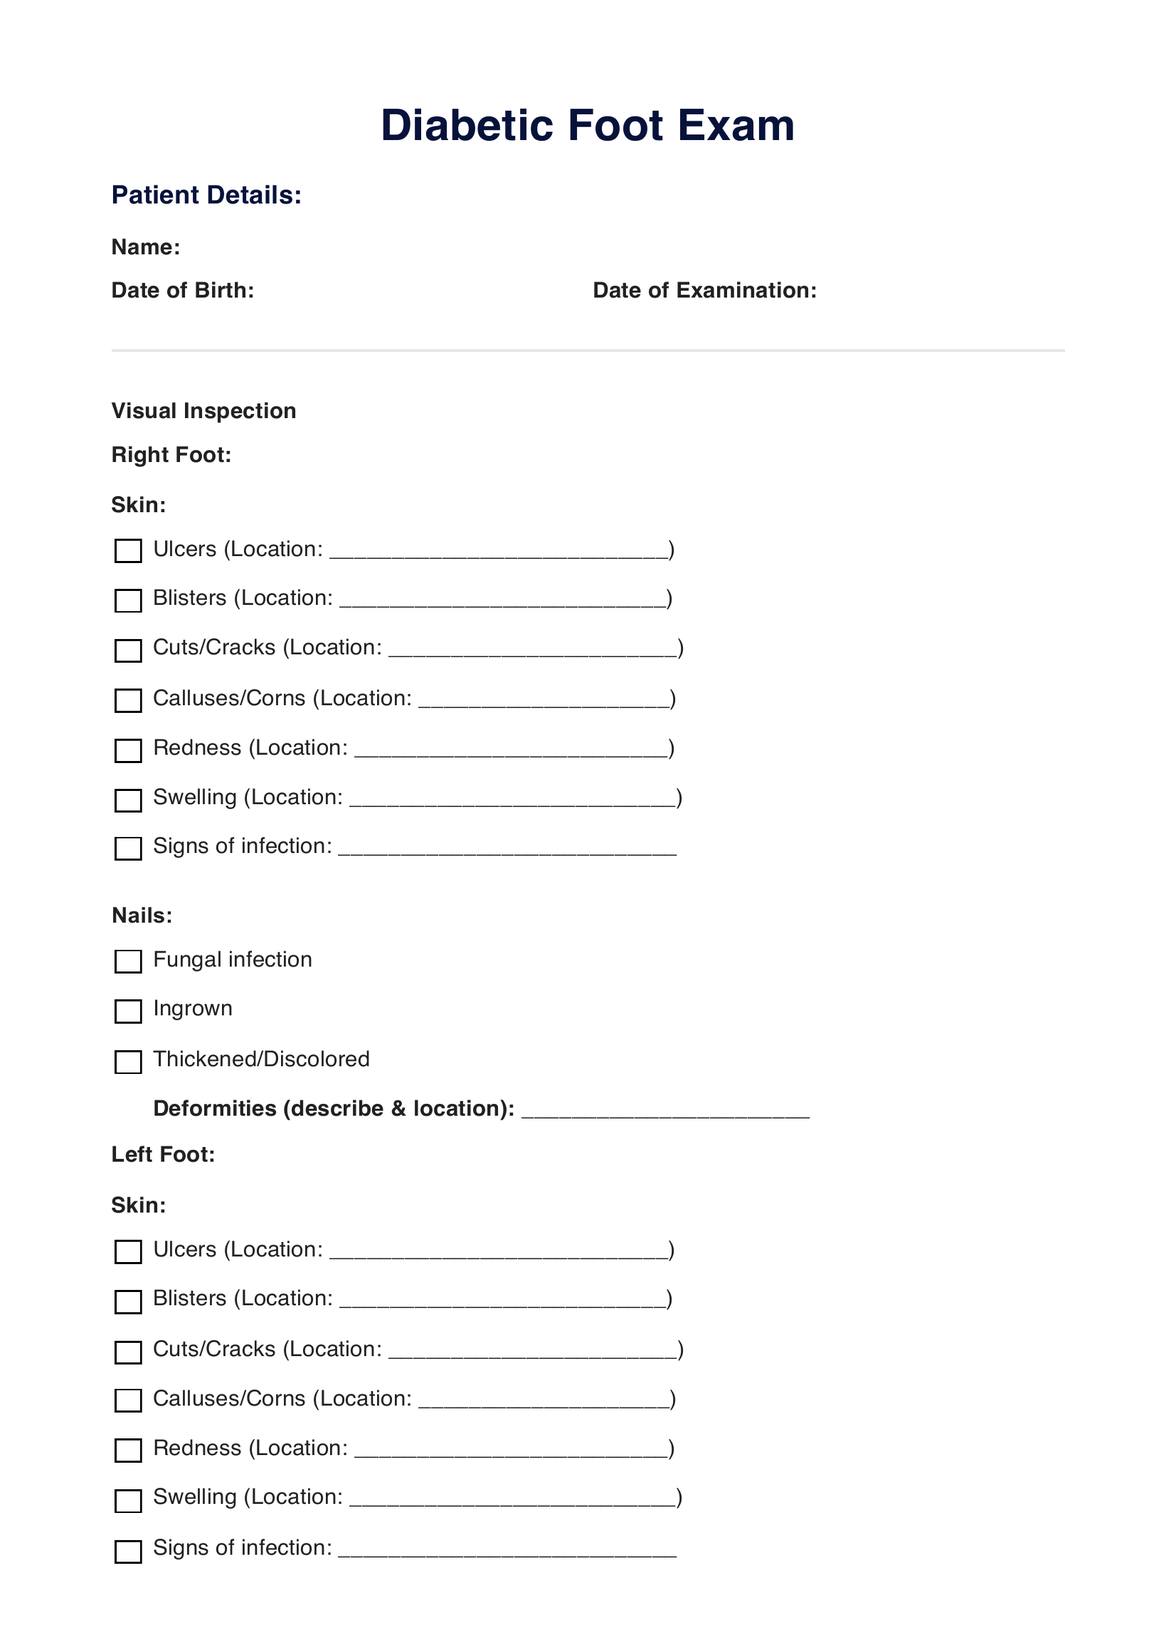 Diabetic Foot Exam PDF Example